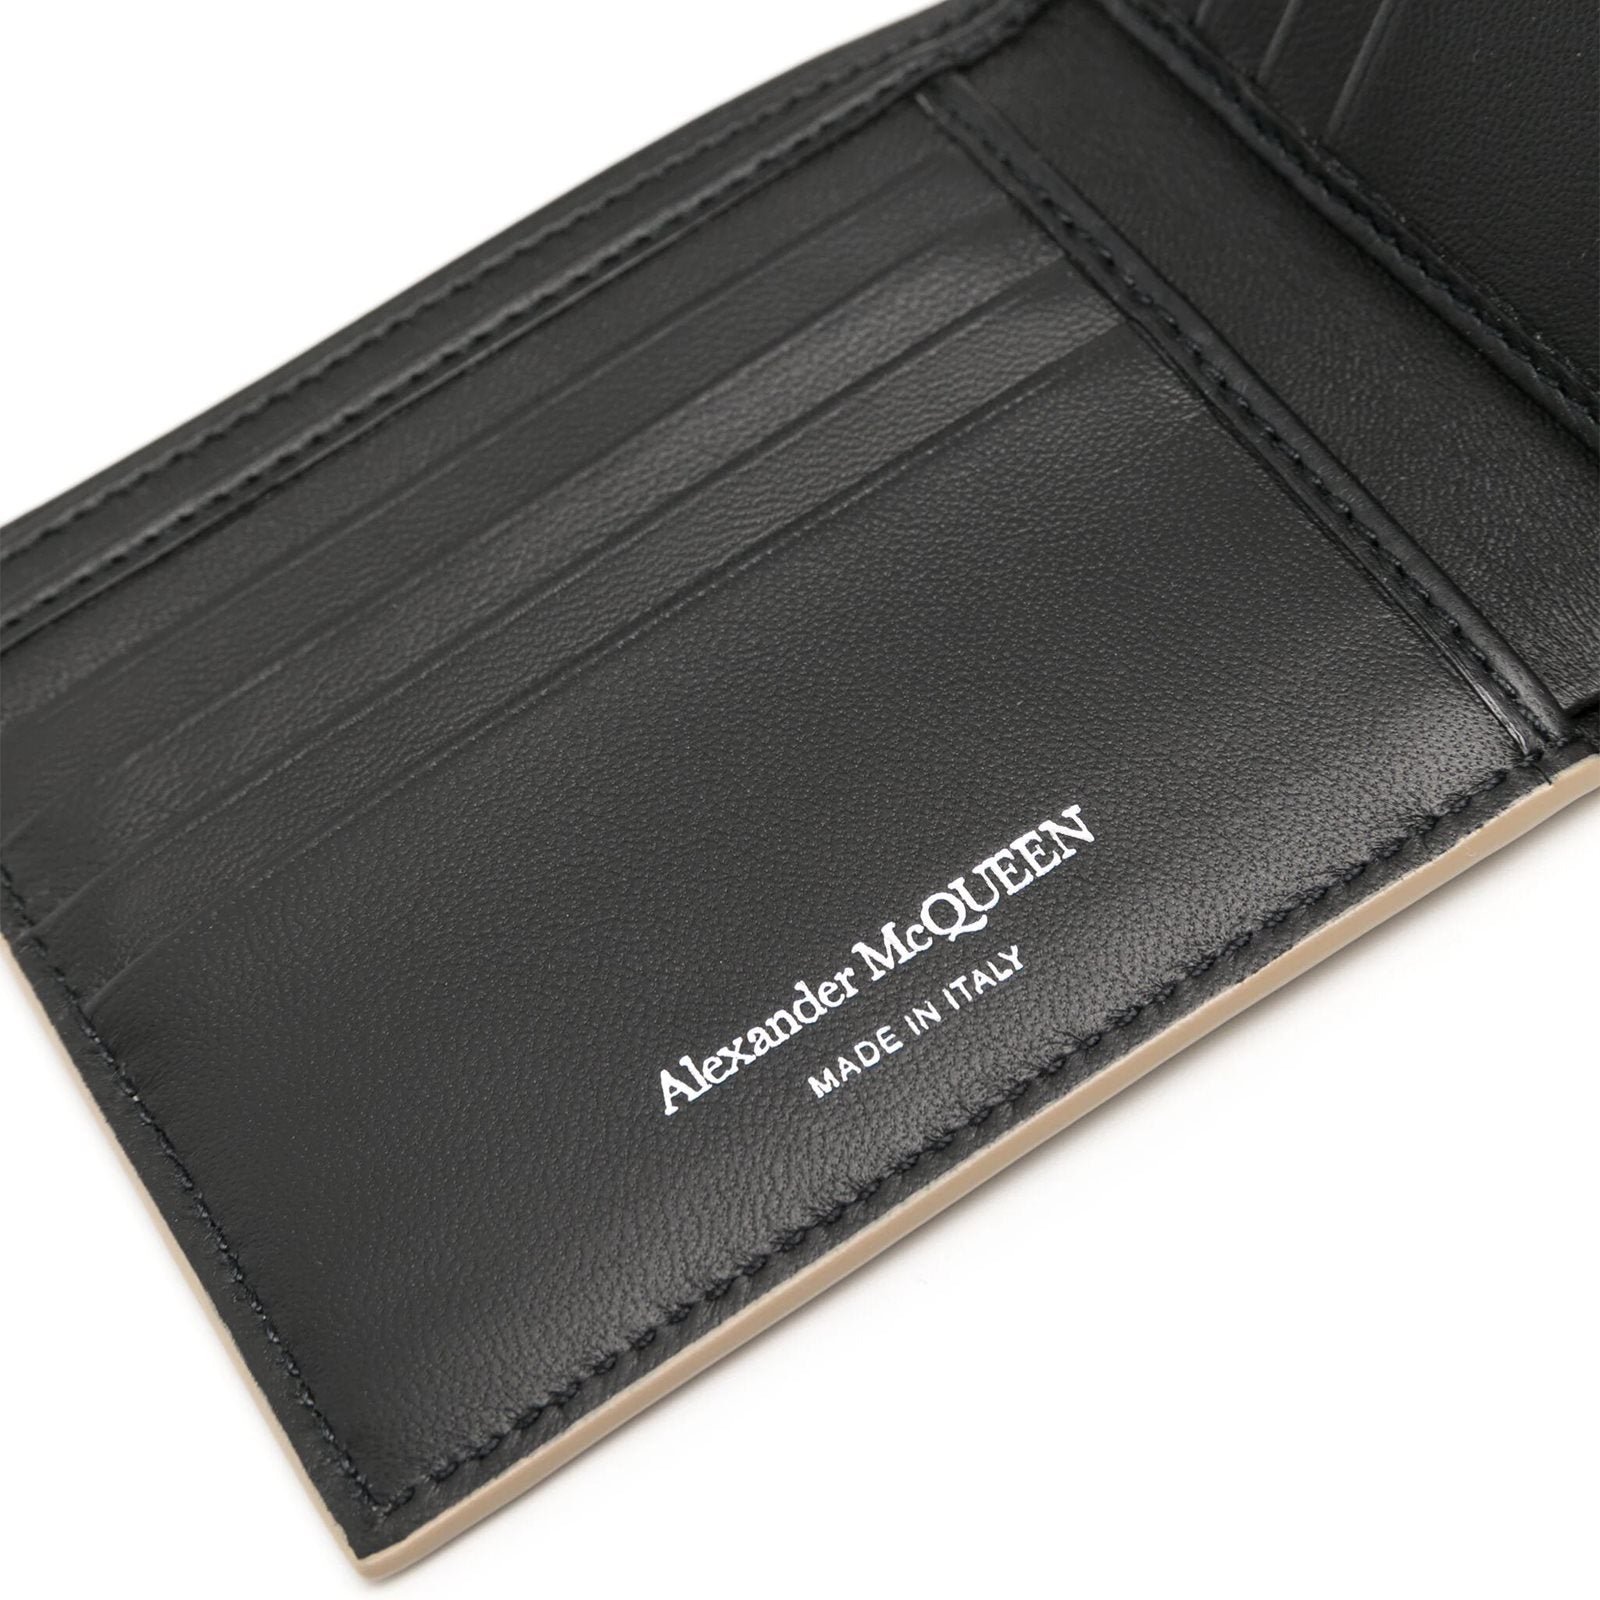 Calf leather billfold wallet